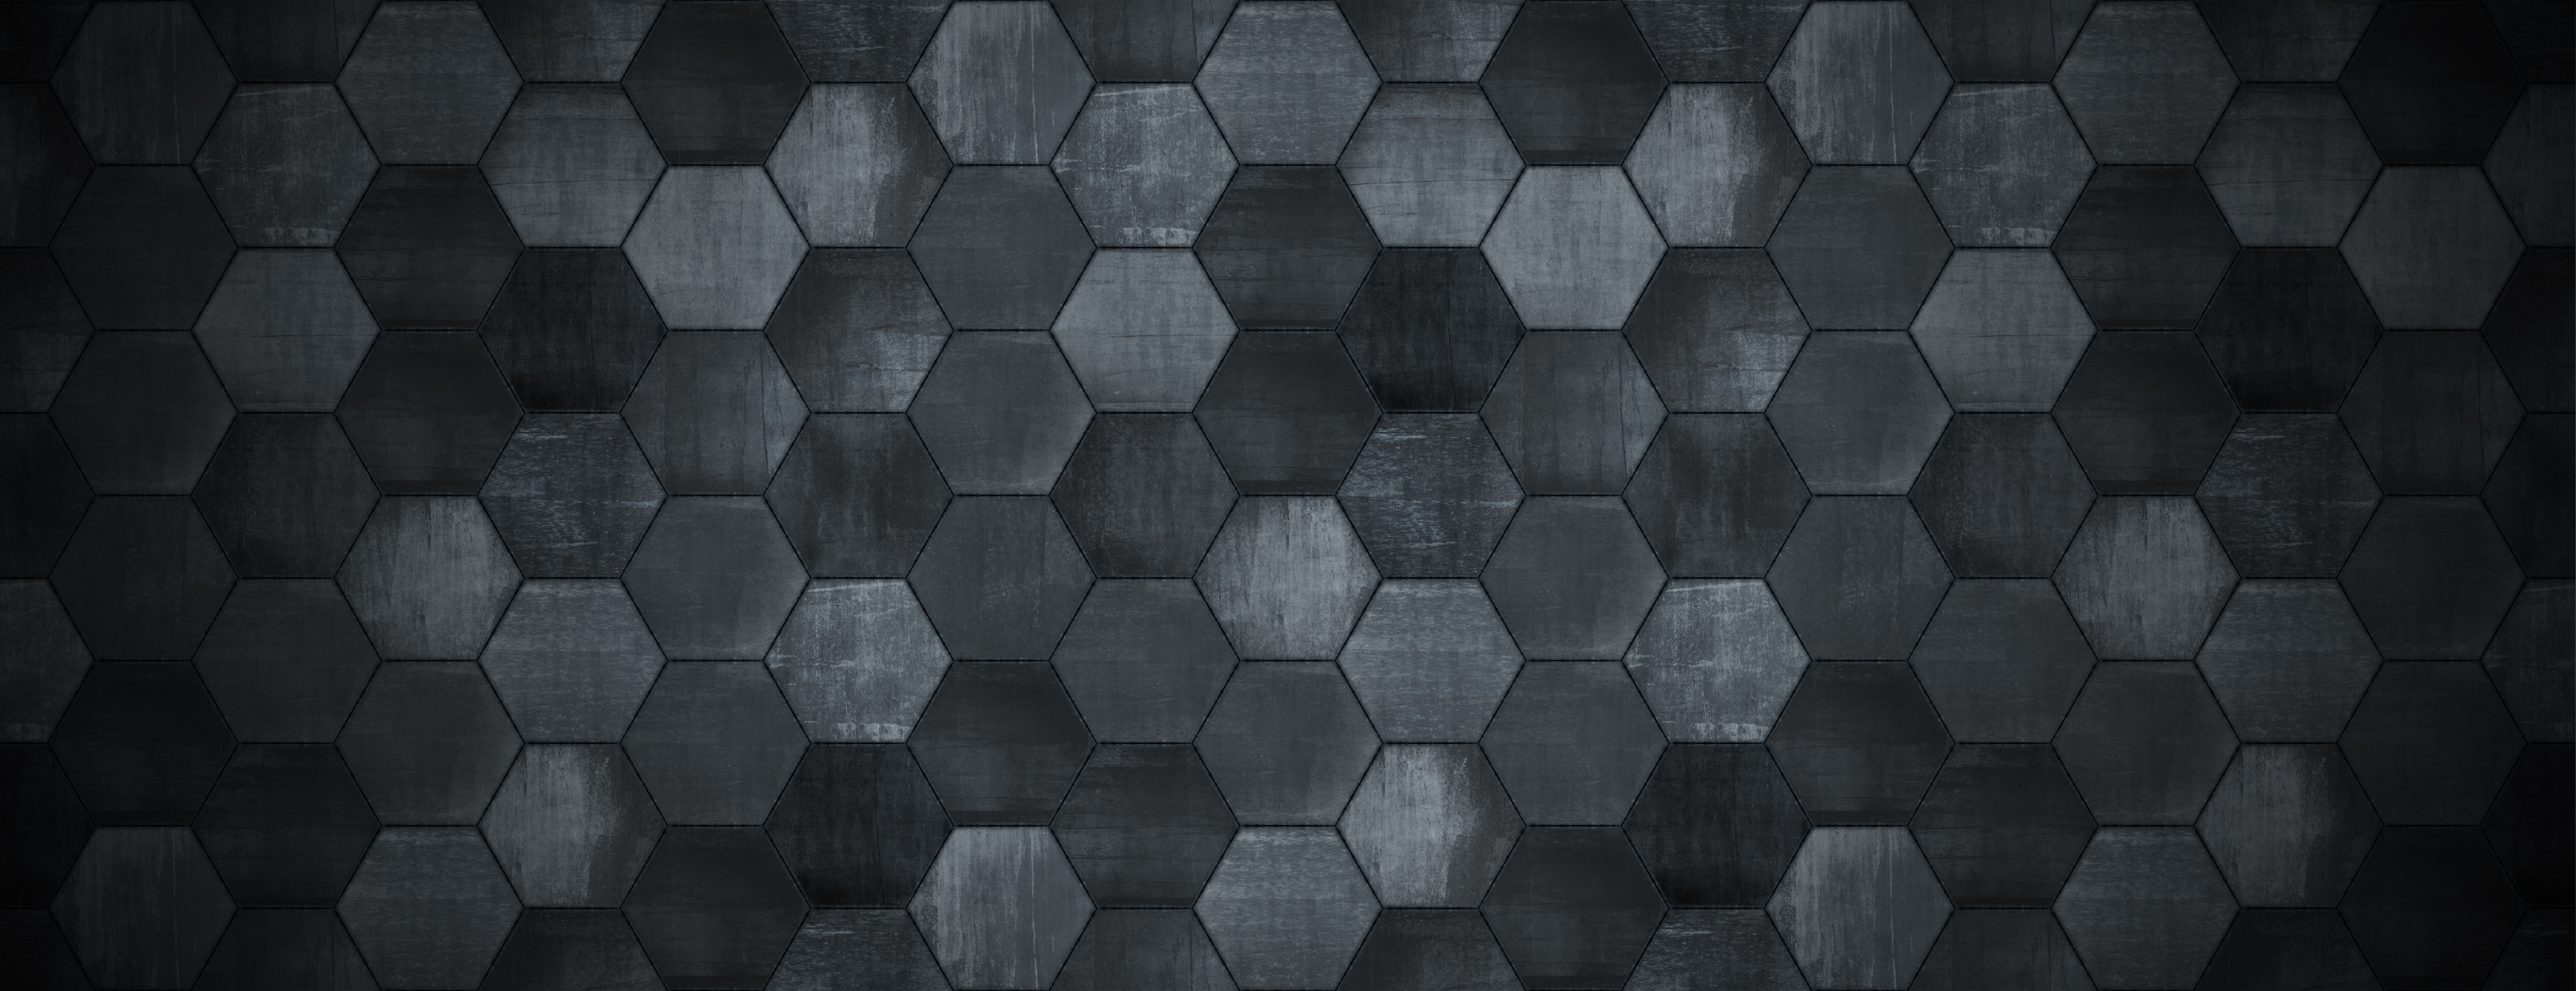 Dark Tiled Background with Spotlight (Website Head)